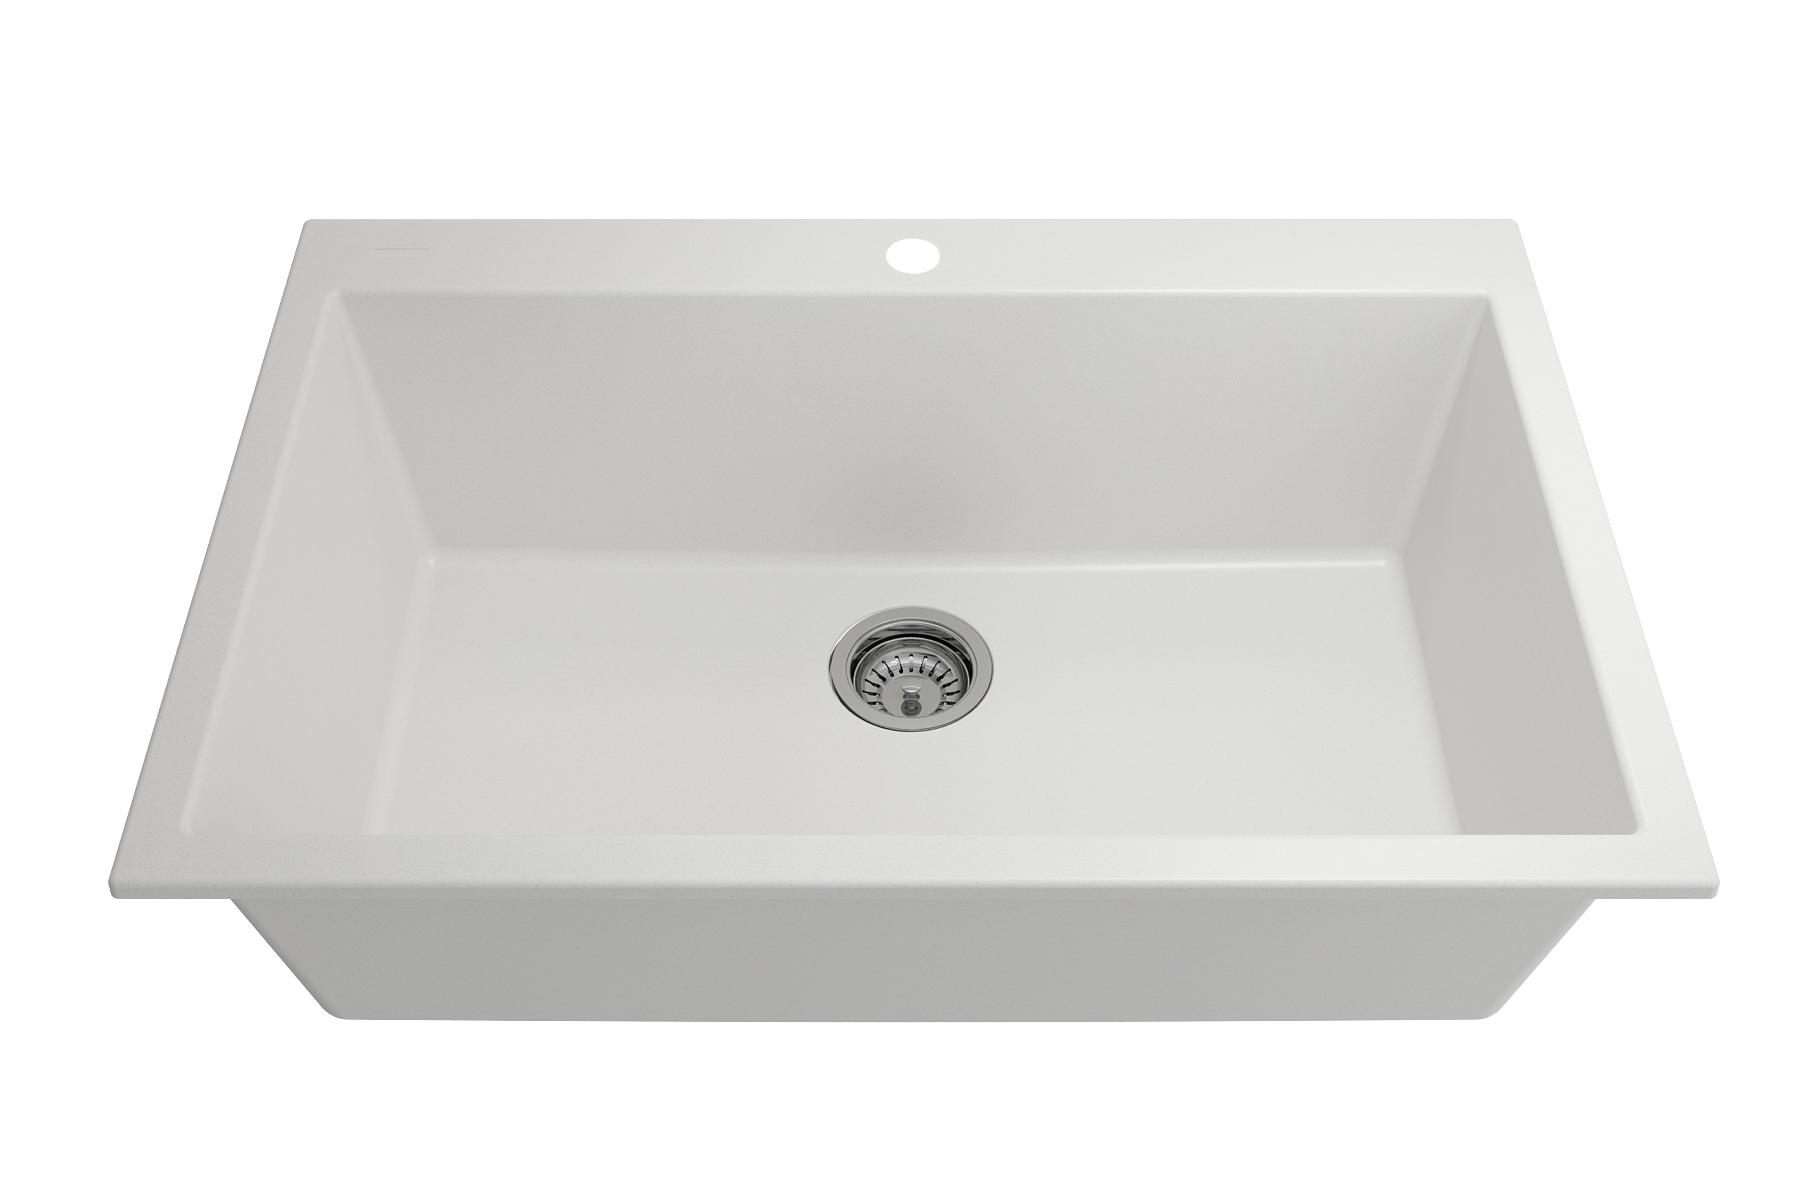 Campino Uno Dual Mount Granite Composite 33 in. Single Bowl Kitchen Sink with Strainer in Milk White